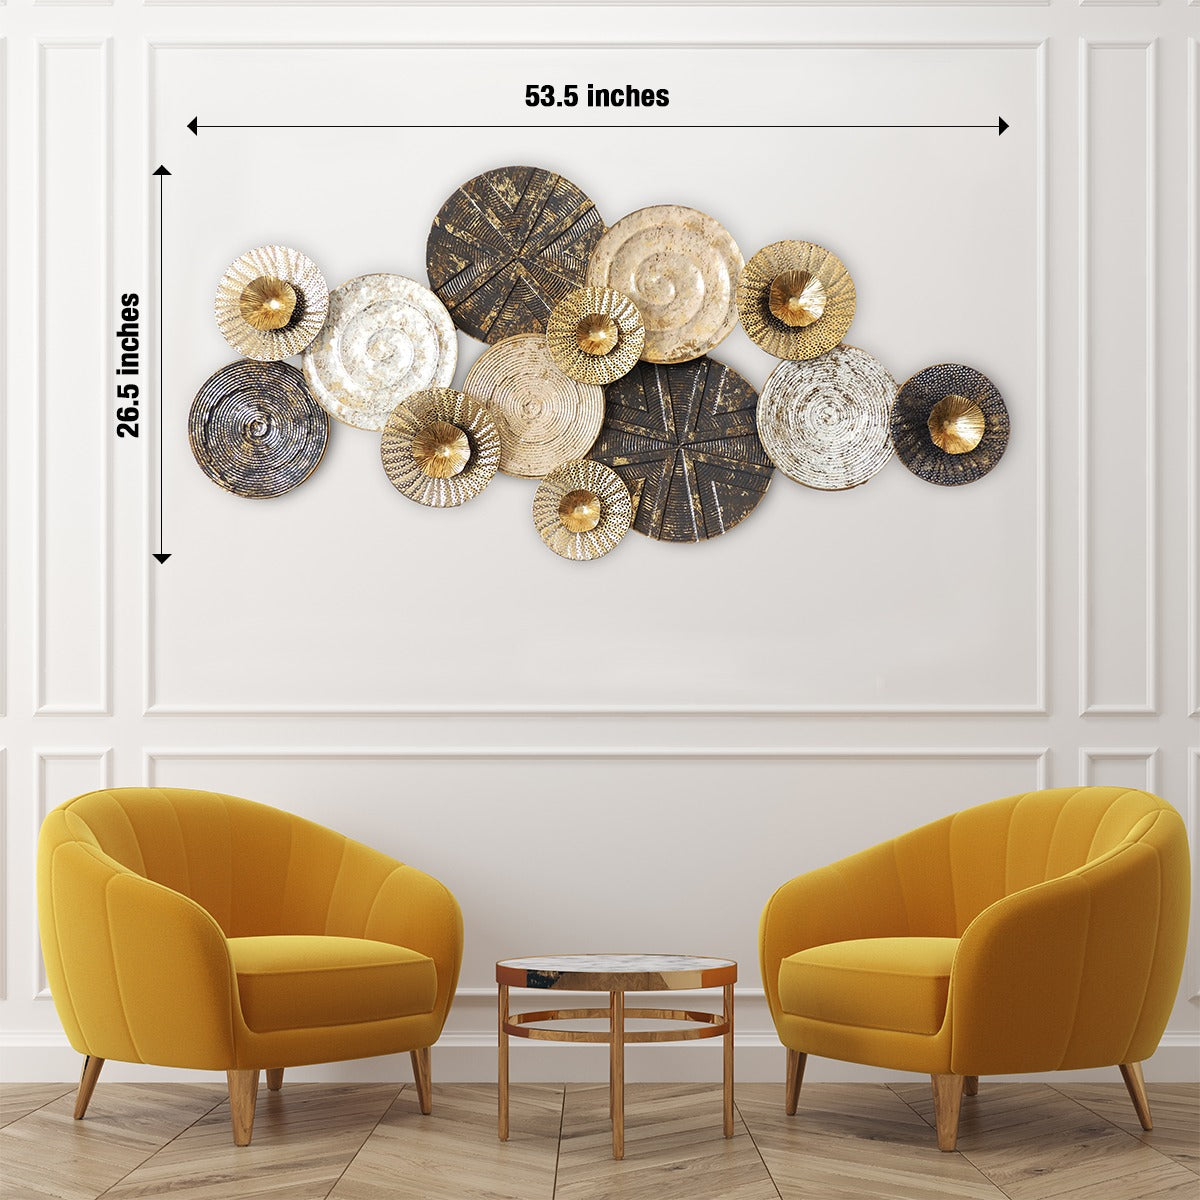 Circular Design Morocco Metal Wall Art For Living Room Home Decor - 53*25 Inch